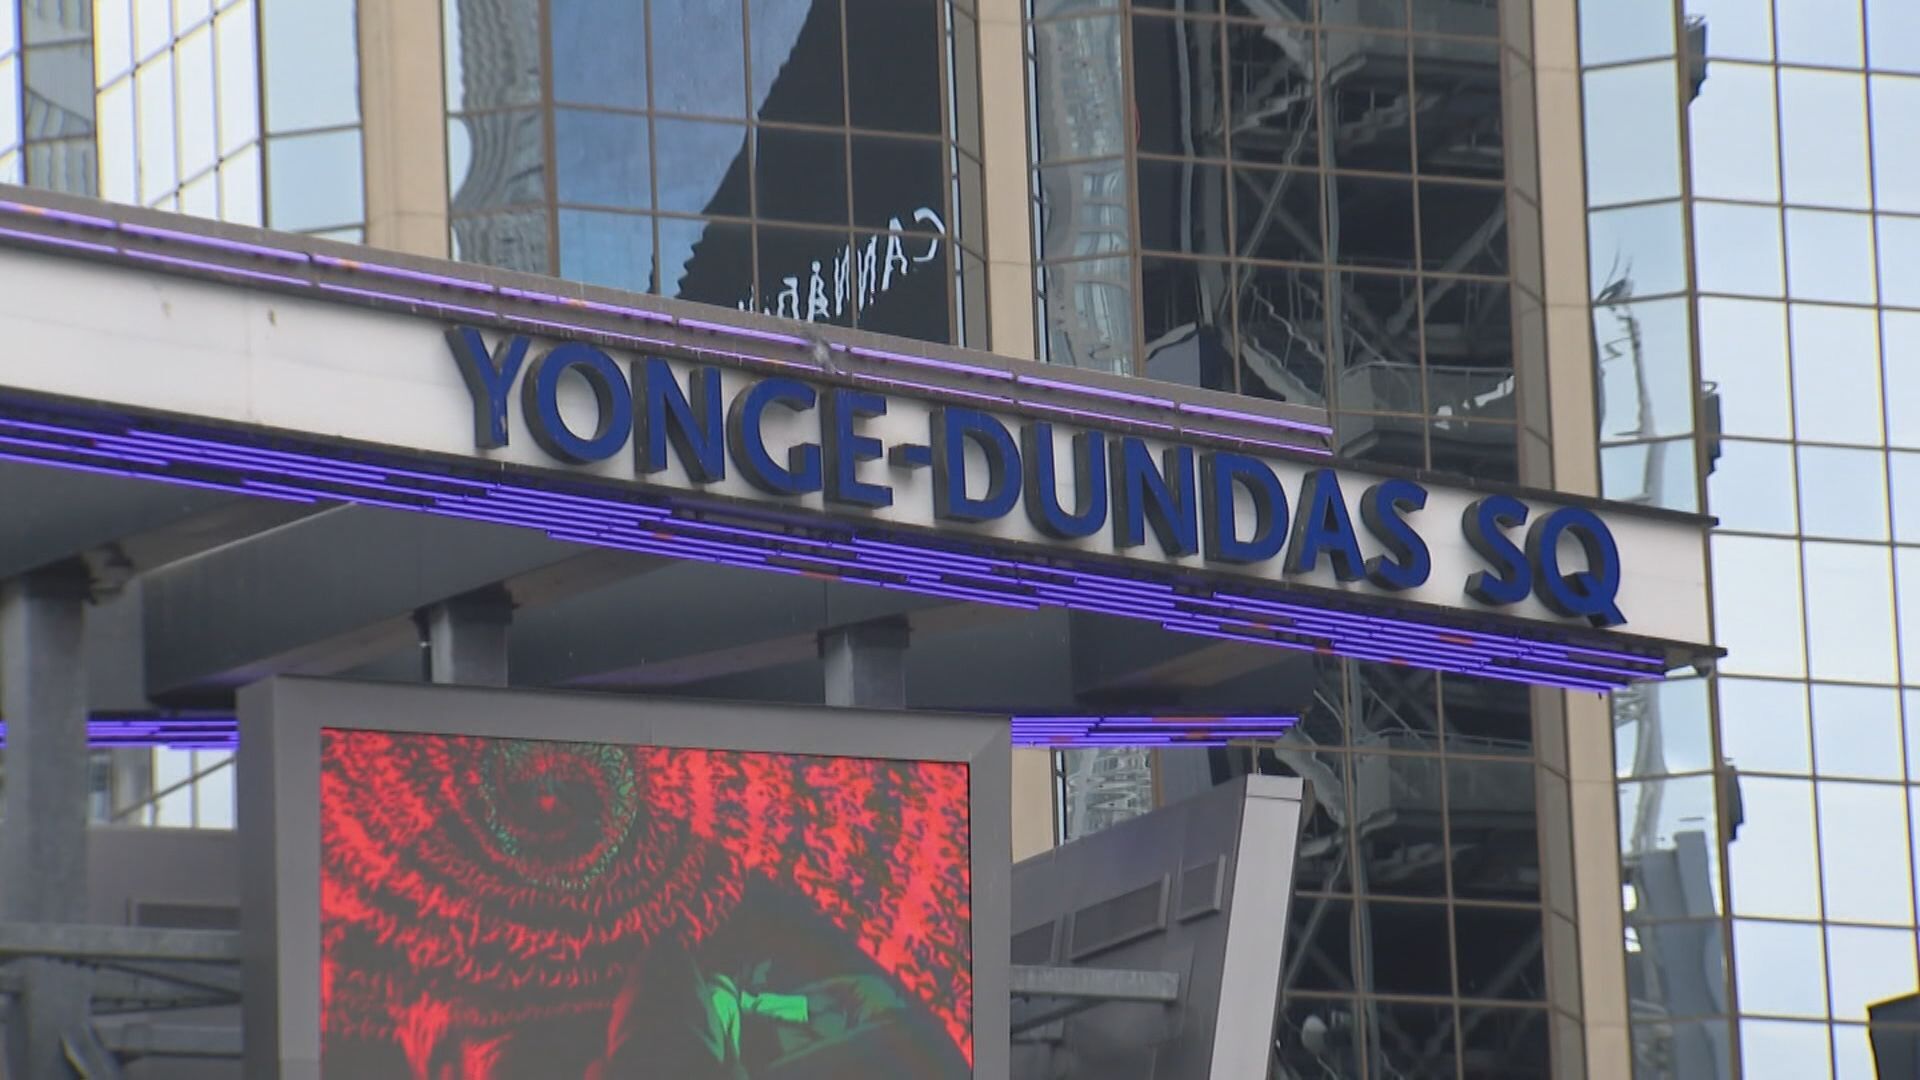 Toronto council advances planning to rename Yonge-Dundas Square as Sankofa Square